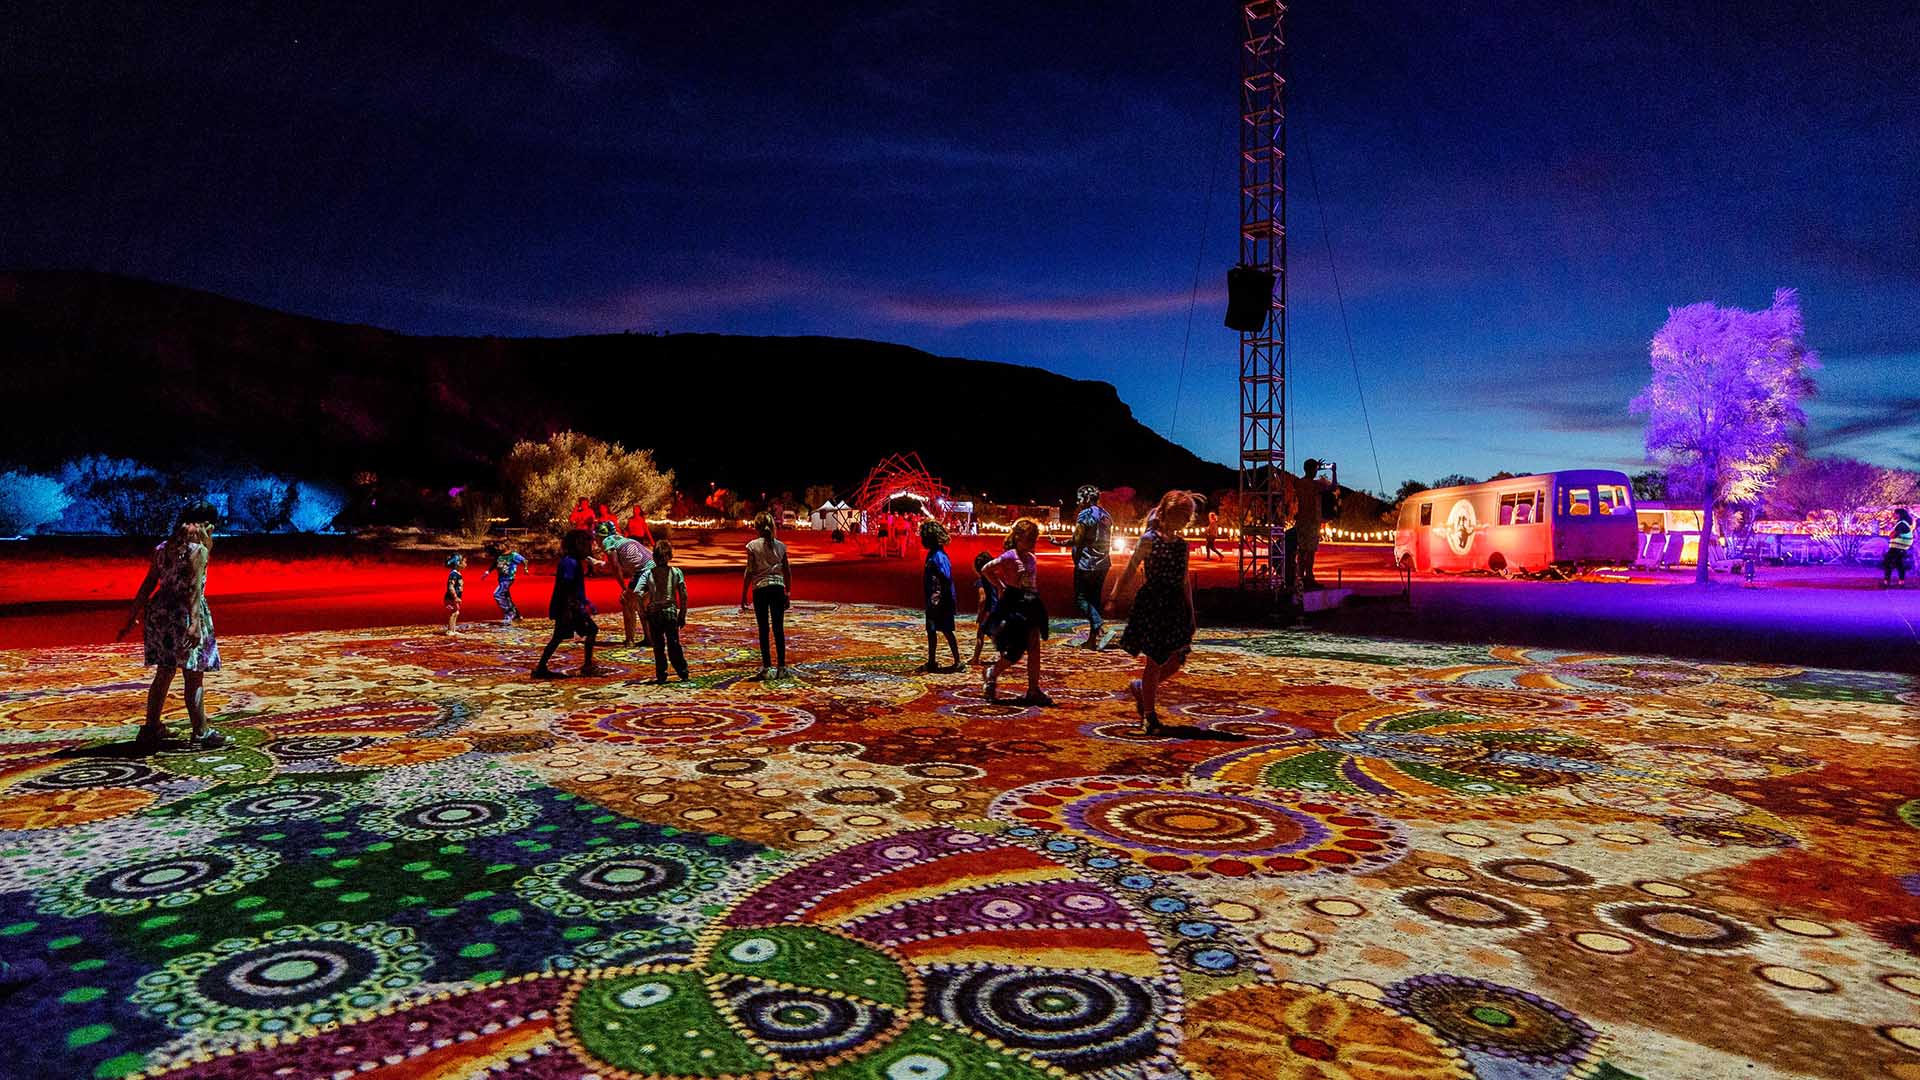 Alice Springs' Dazzling Parrtjima Festival Will Light Up the Red Centre in September